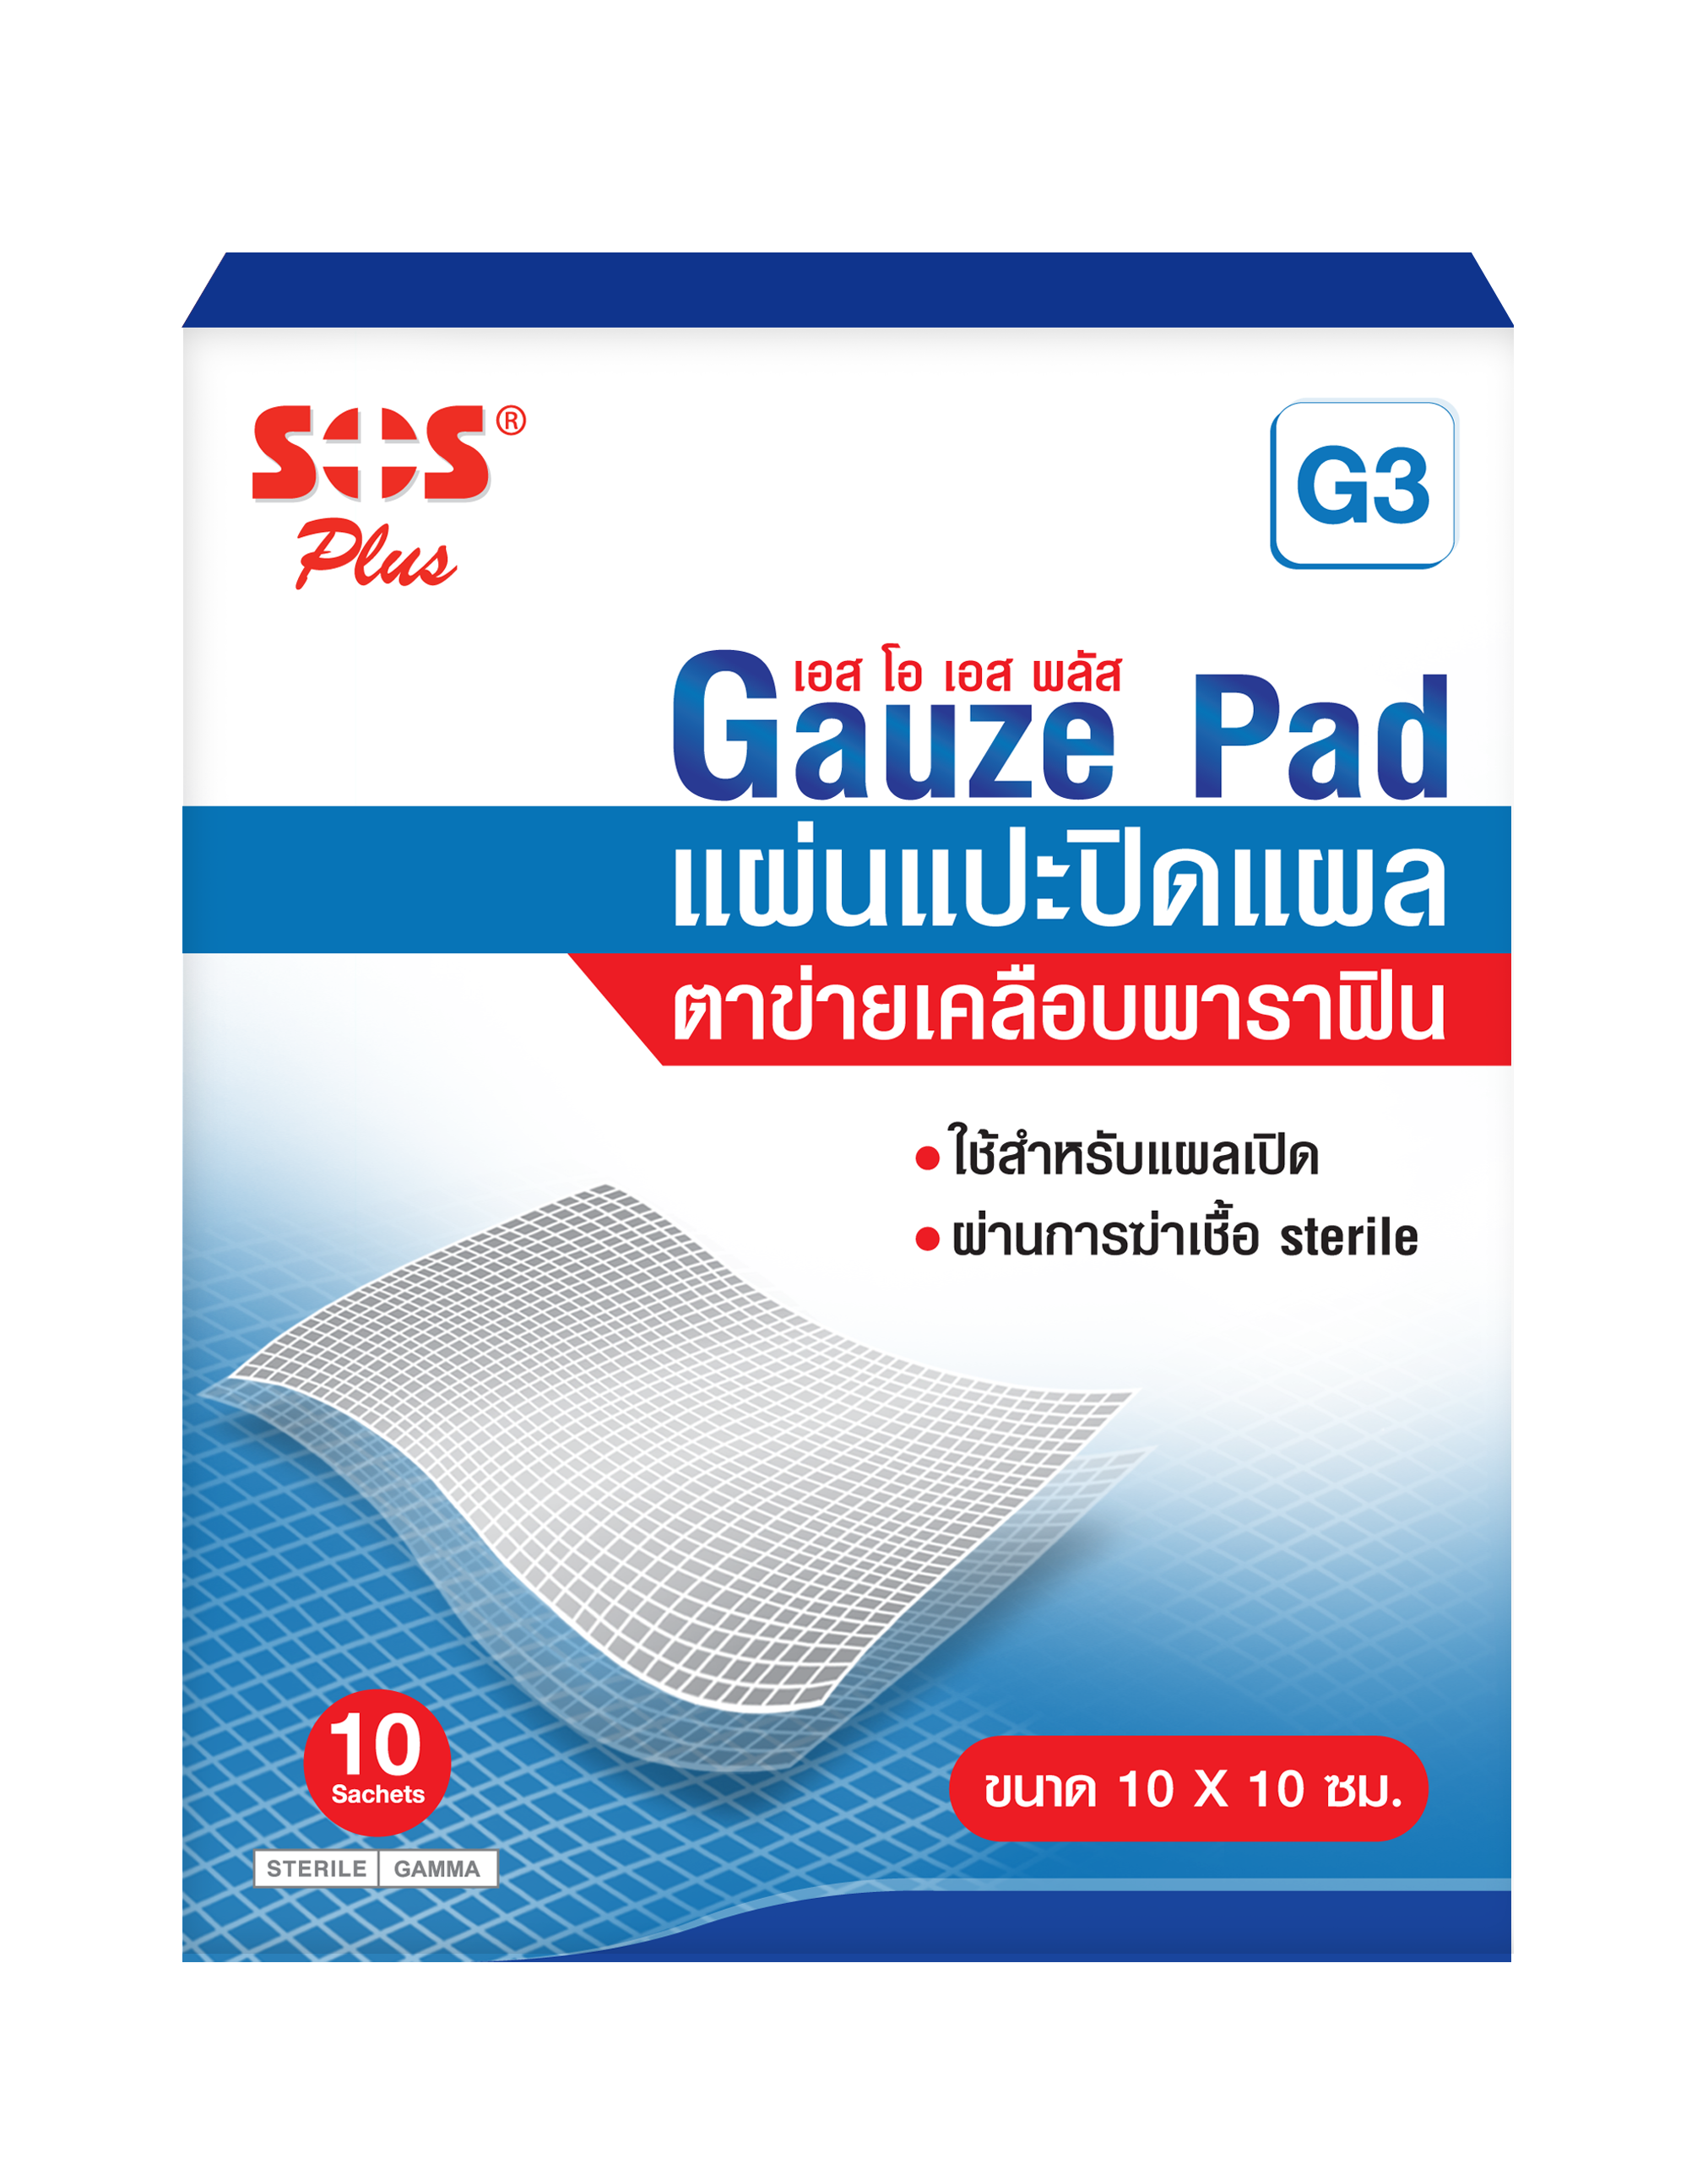 3D Guaze Pad Box_Retail